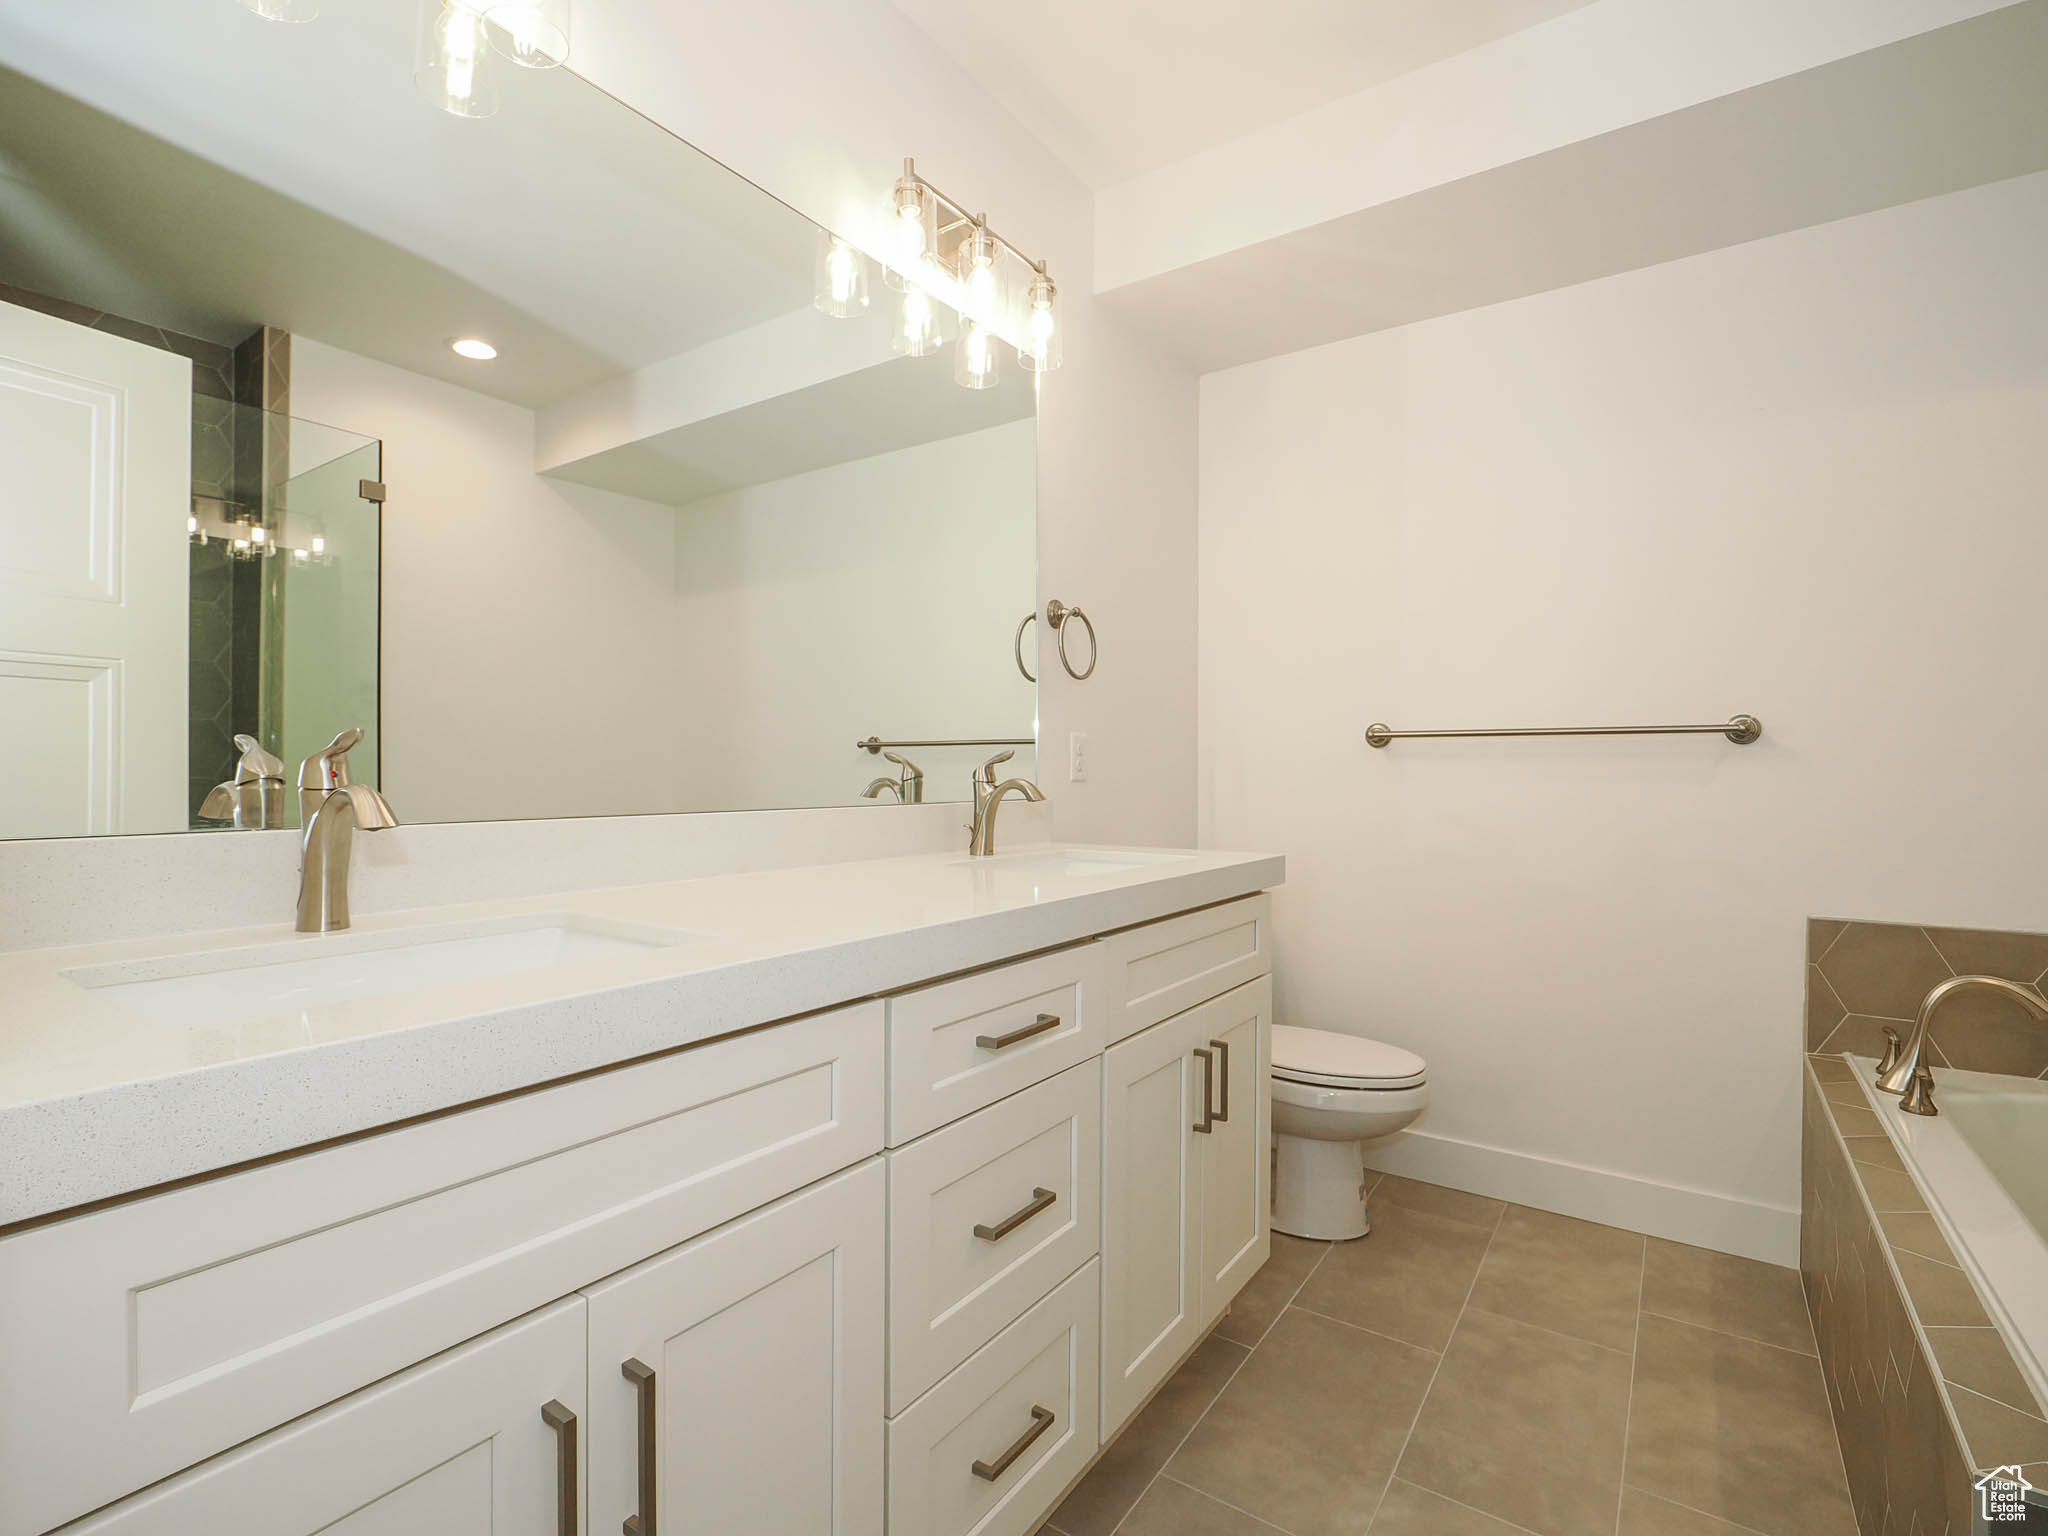 Bathroom featuring toilet, tiled tub, double sink vanity, and tile floors